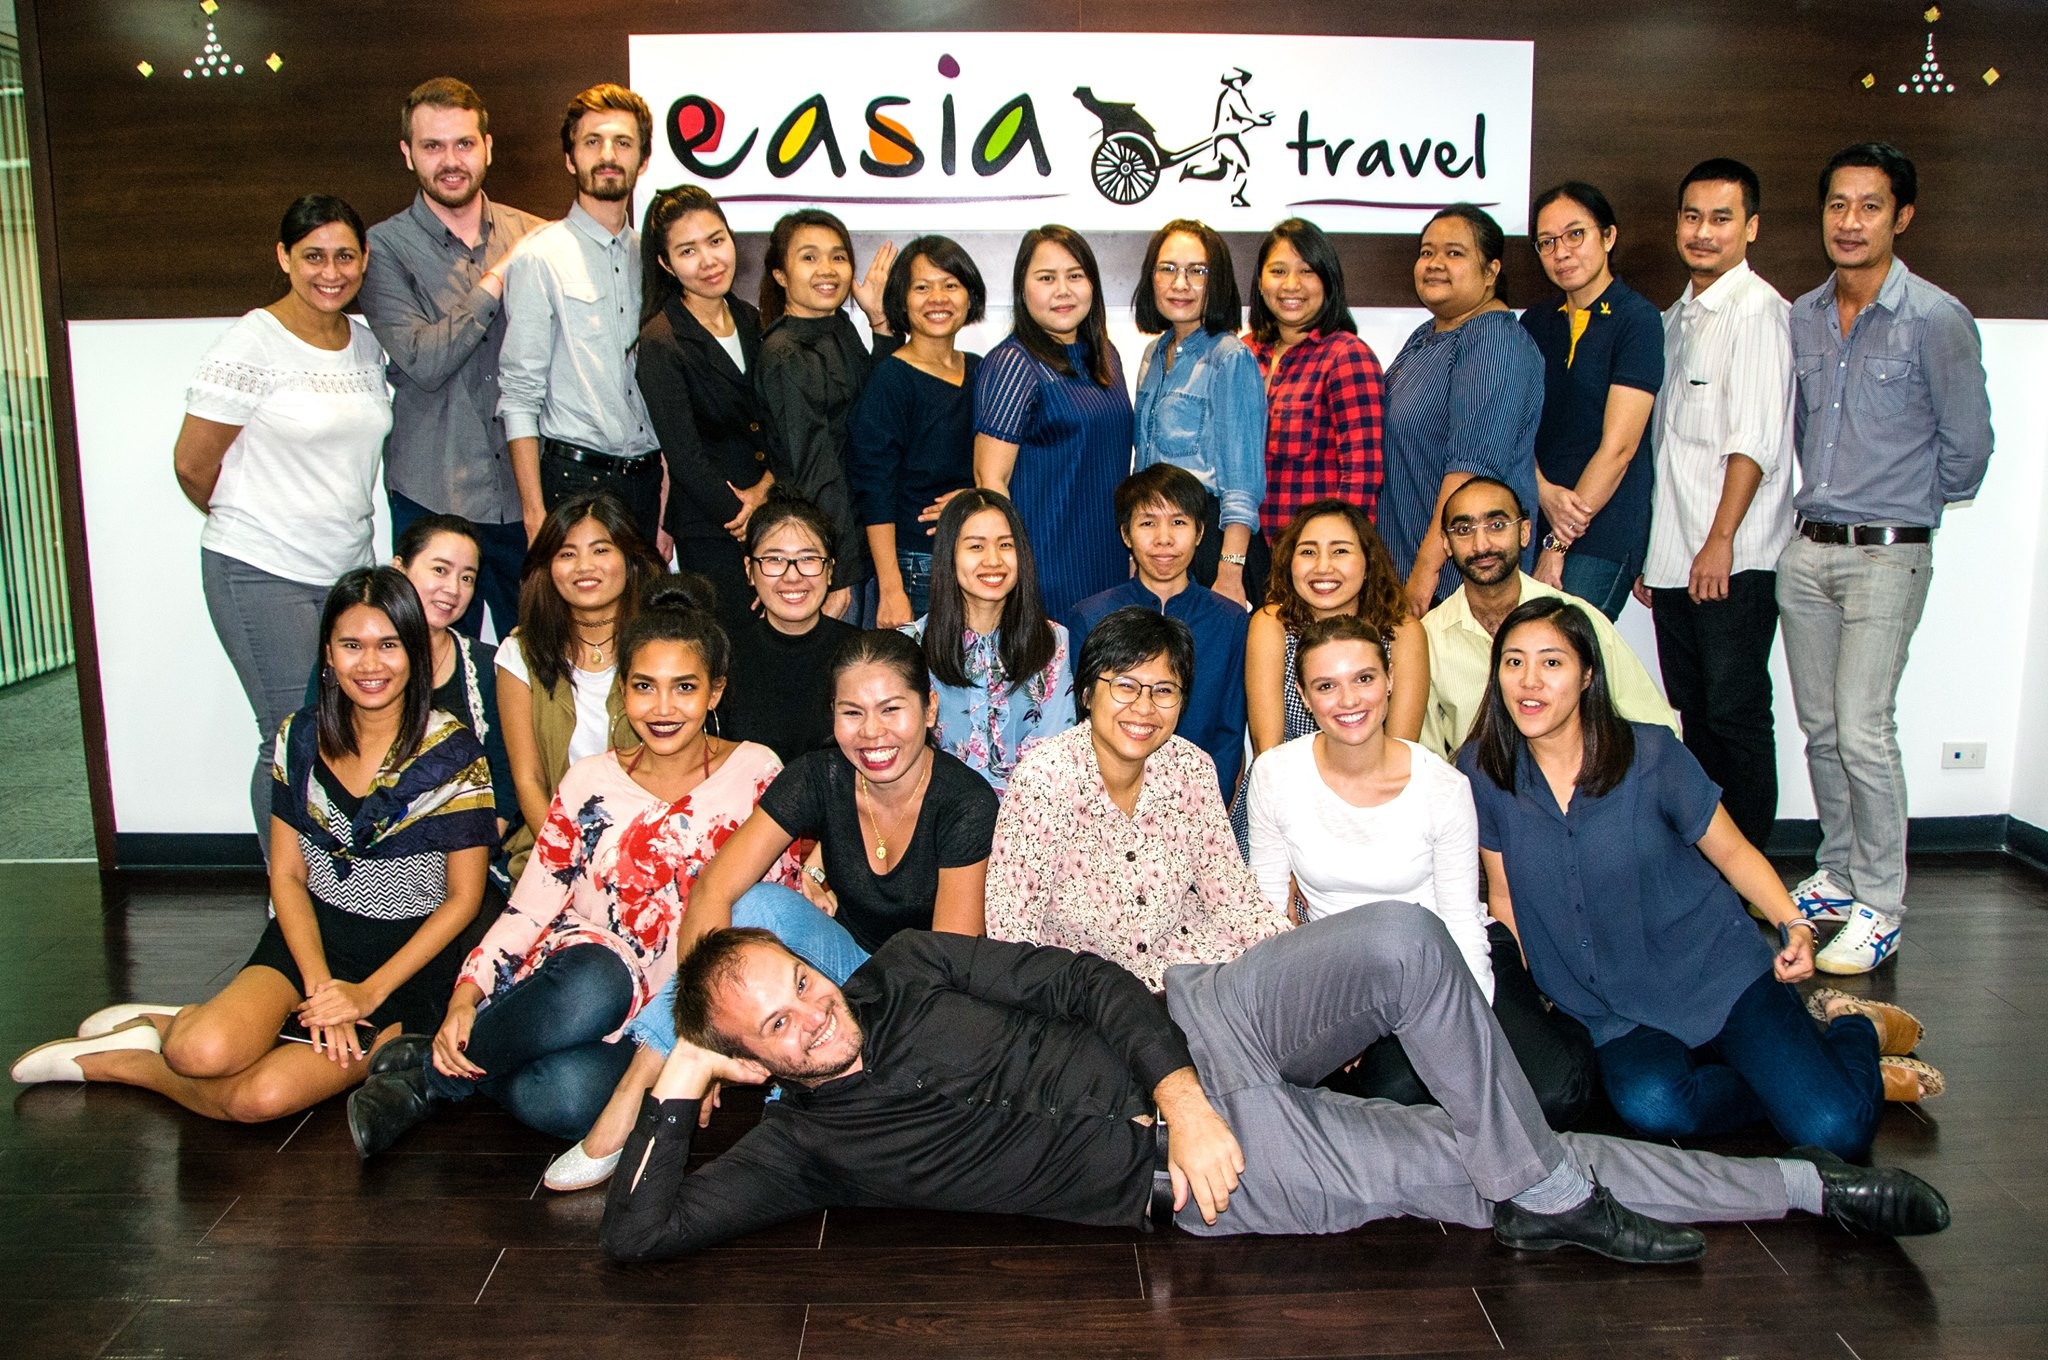 Easia Travel Thailand Jobs Reviews Photos Workventure